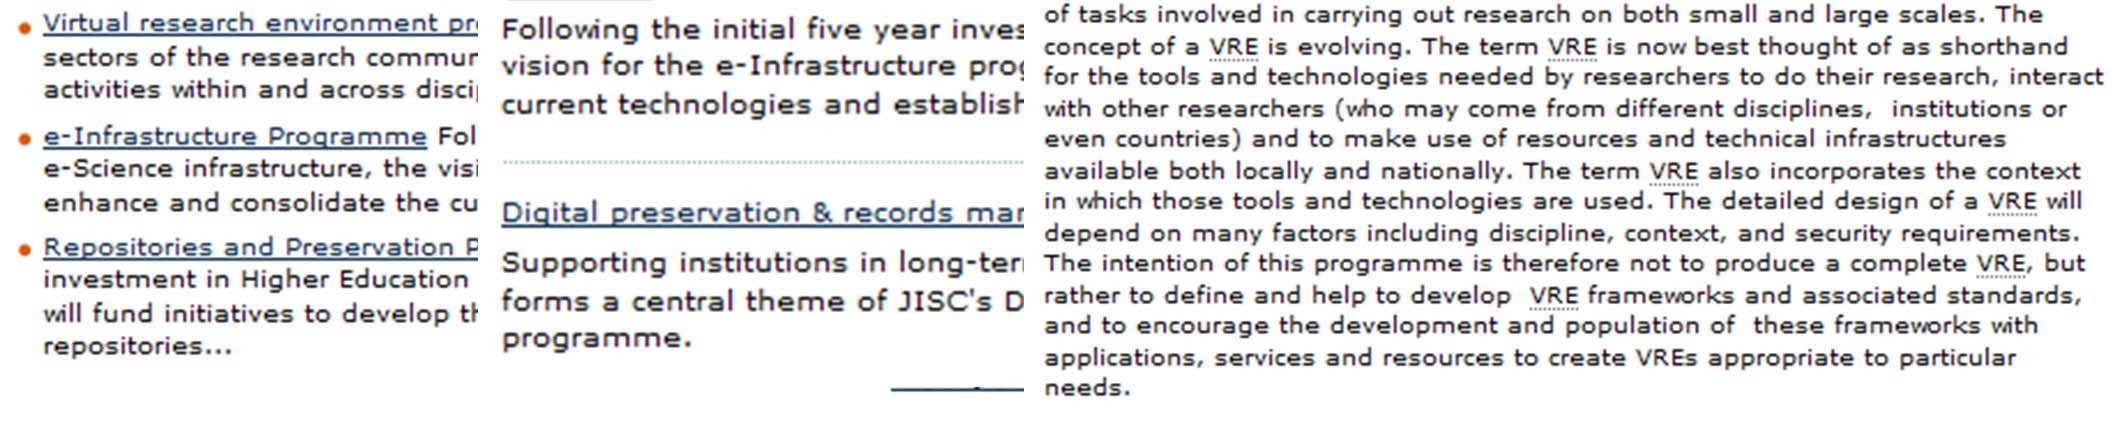 Joint Information Systems Committee (JISC) http://www.jisc.ac.